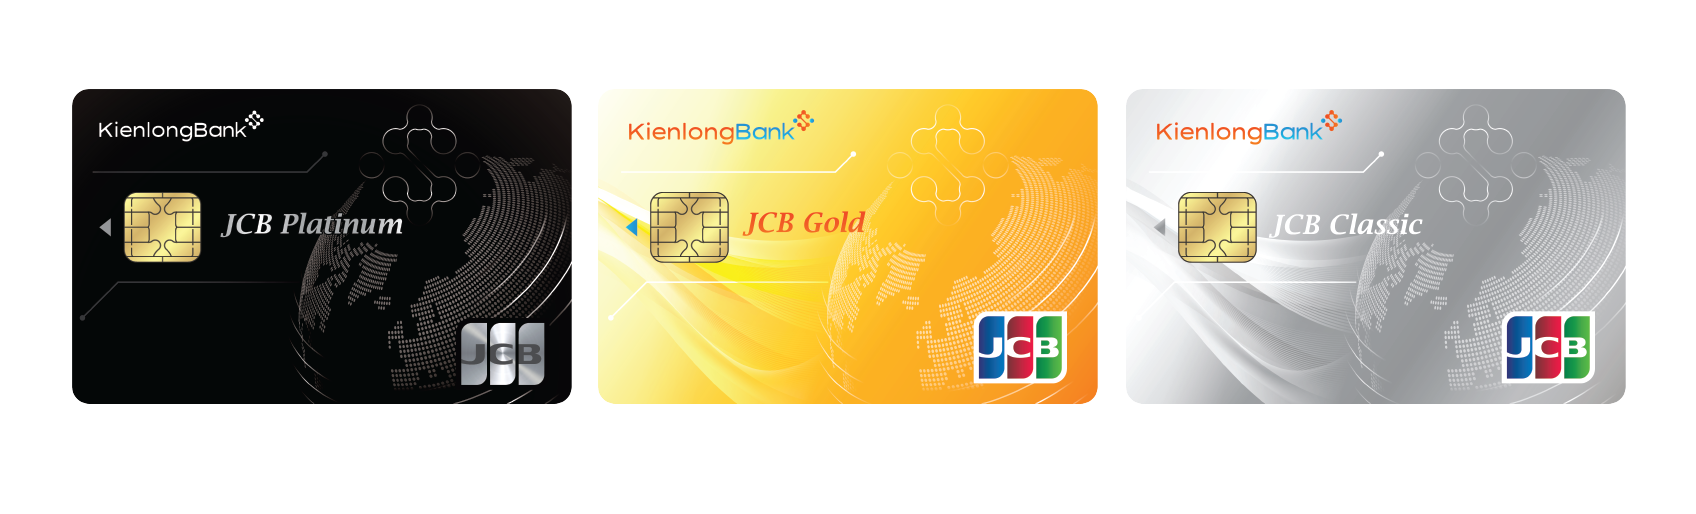 Kienlongbank JCB international credit card